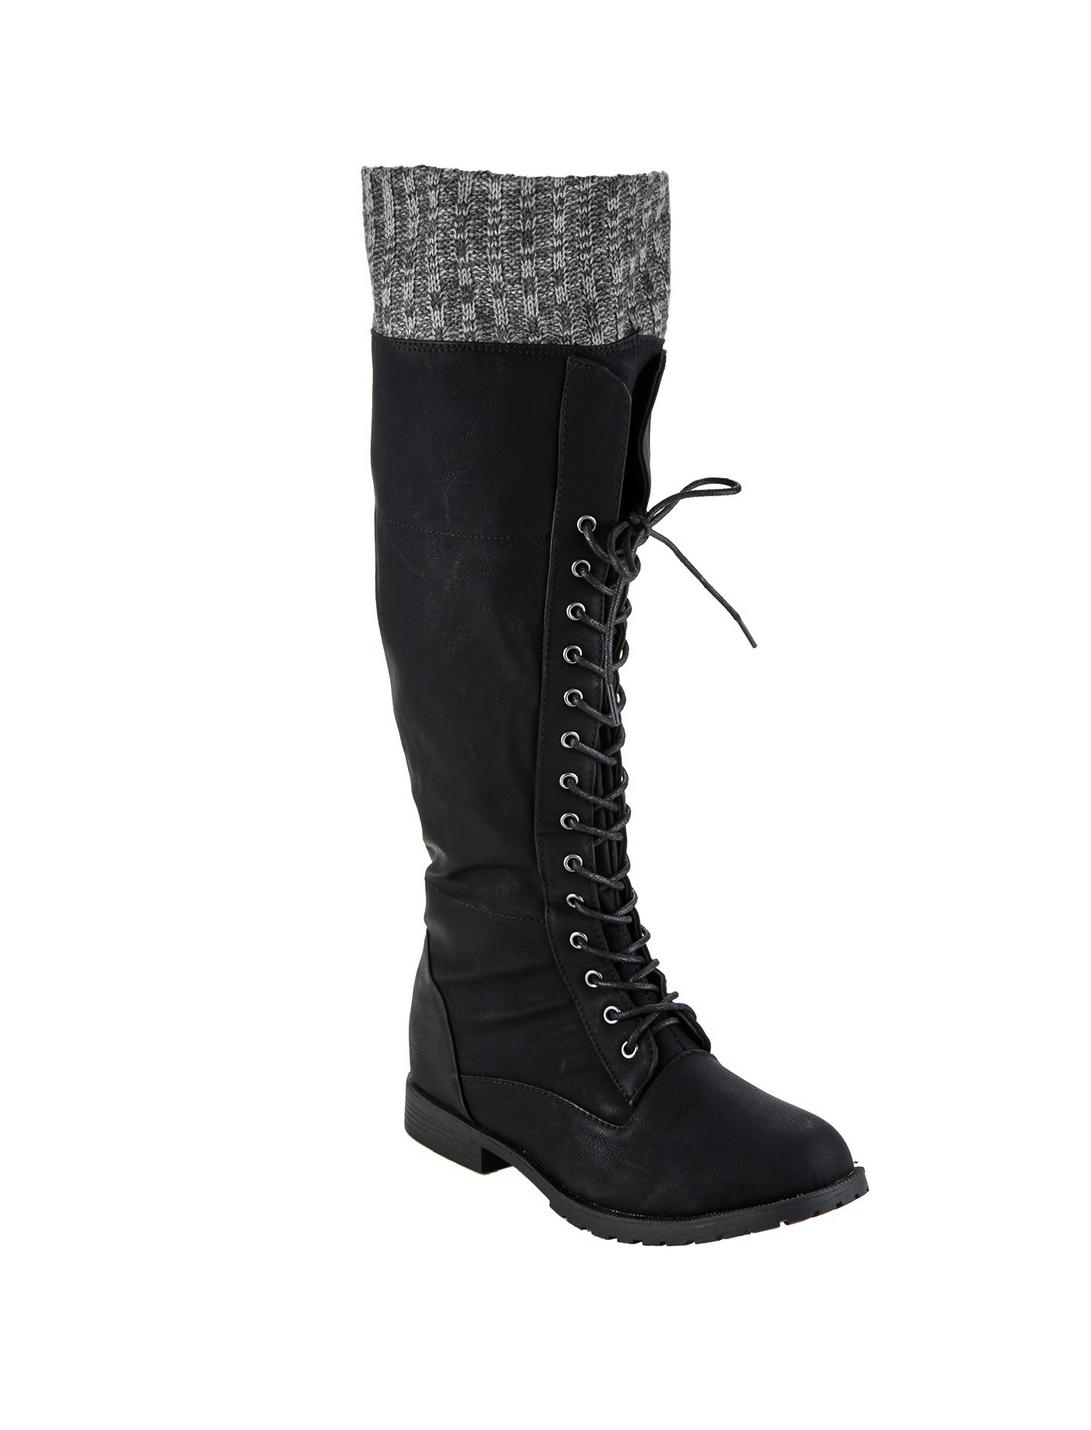 Black Lined Boots, BLACK, hi-res